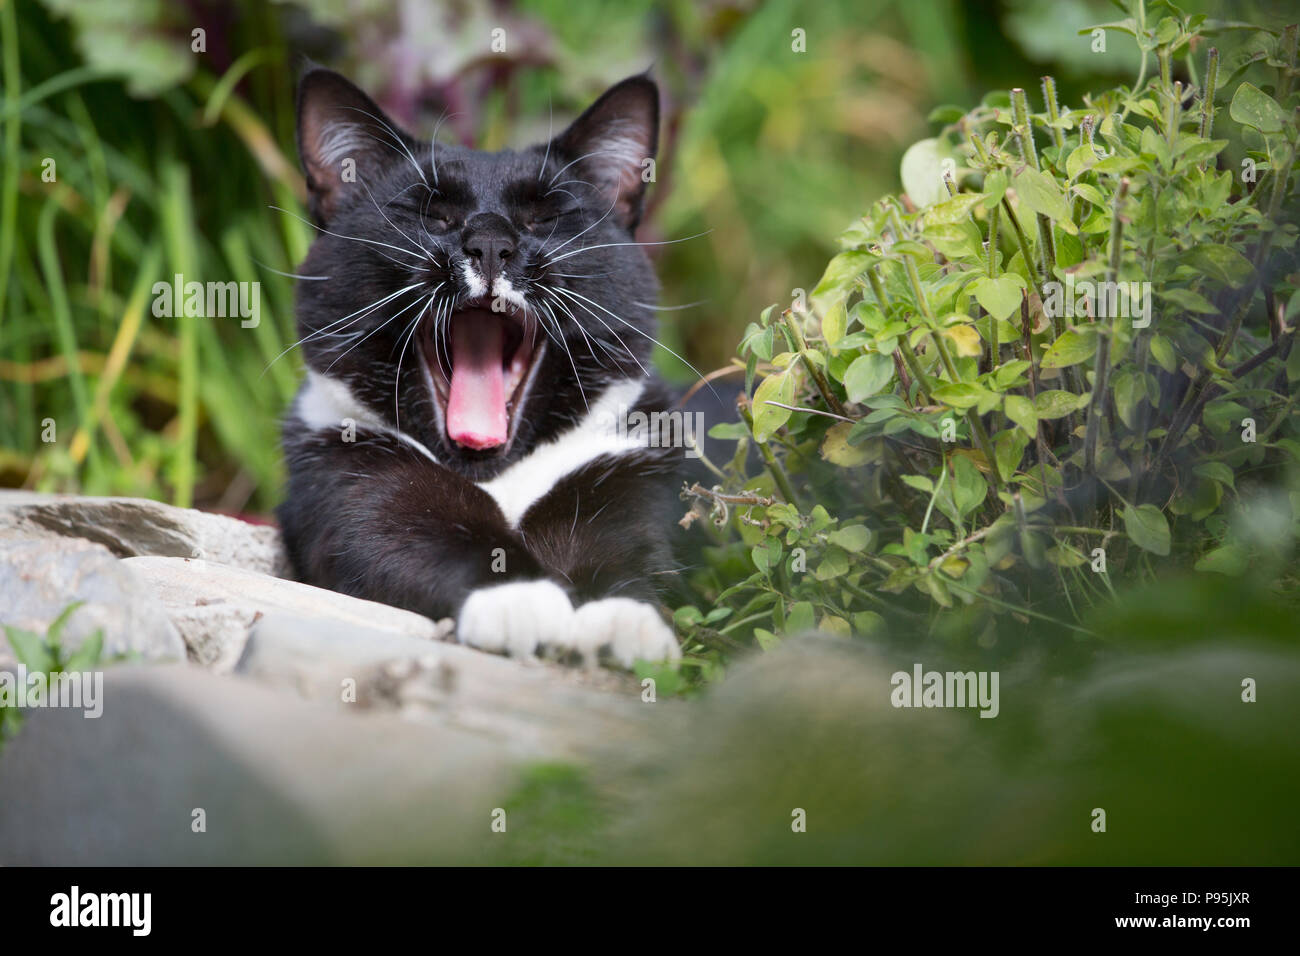 Cat outdoors, yawning Stock Photo